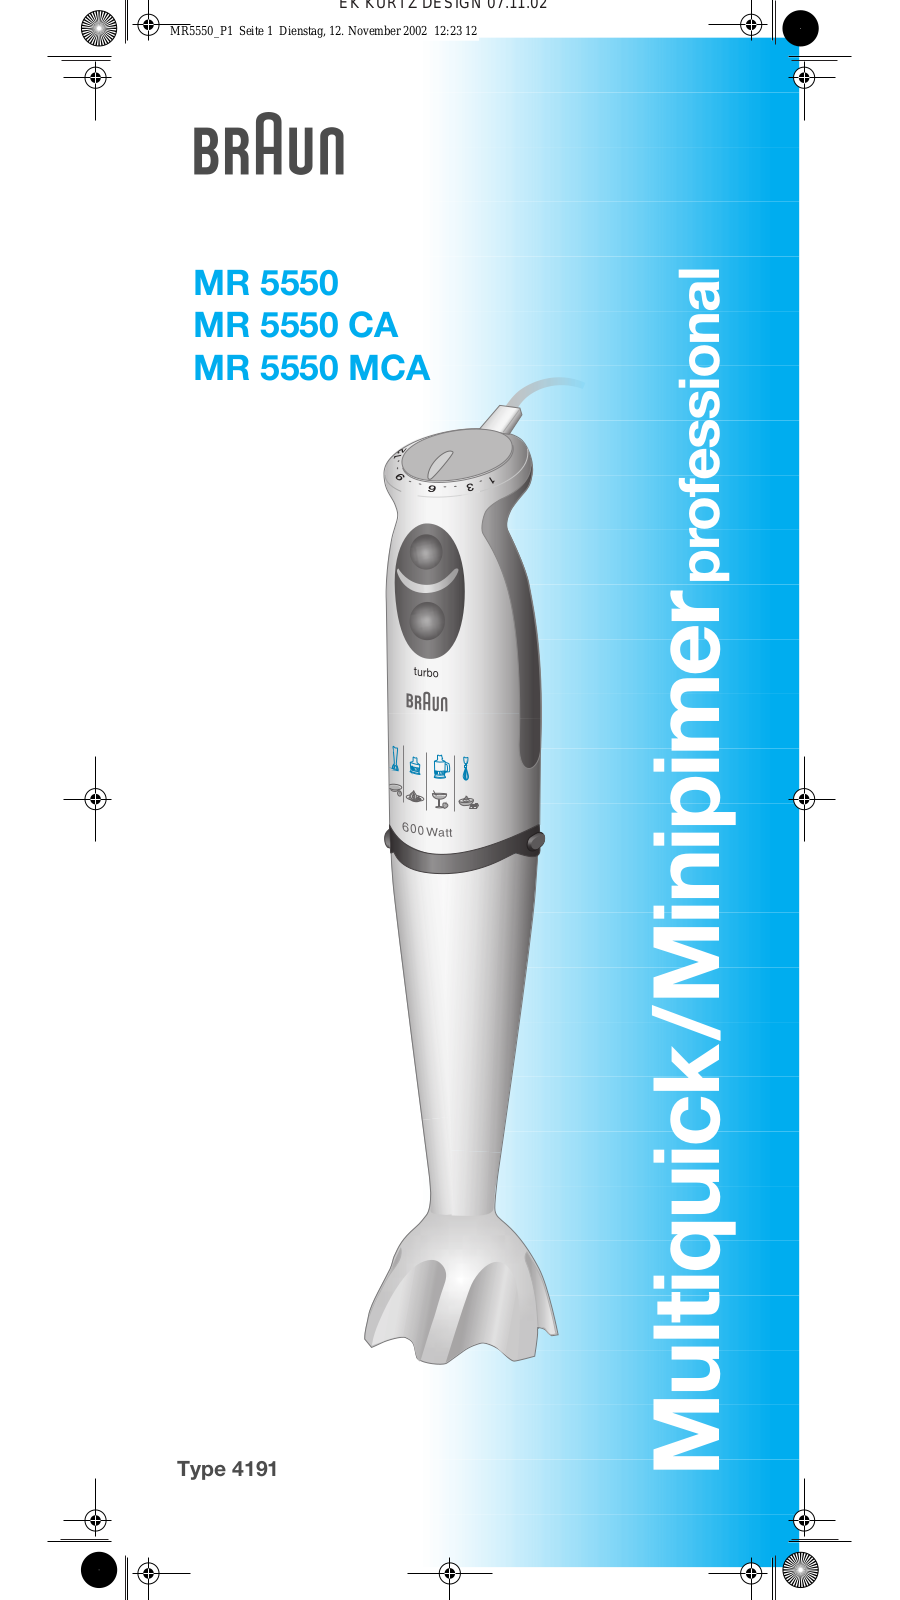 Braun MR 5550 MCA, MR 5550 User Manual